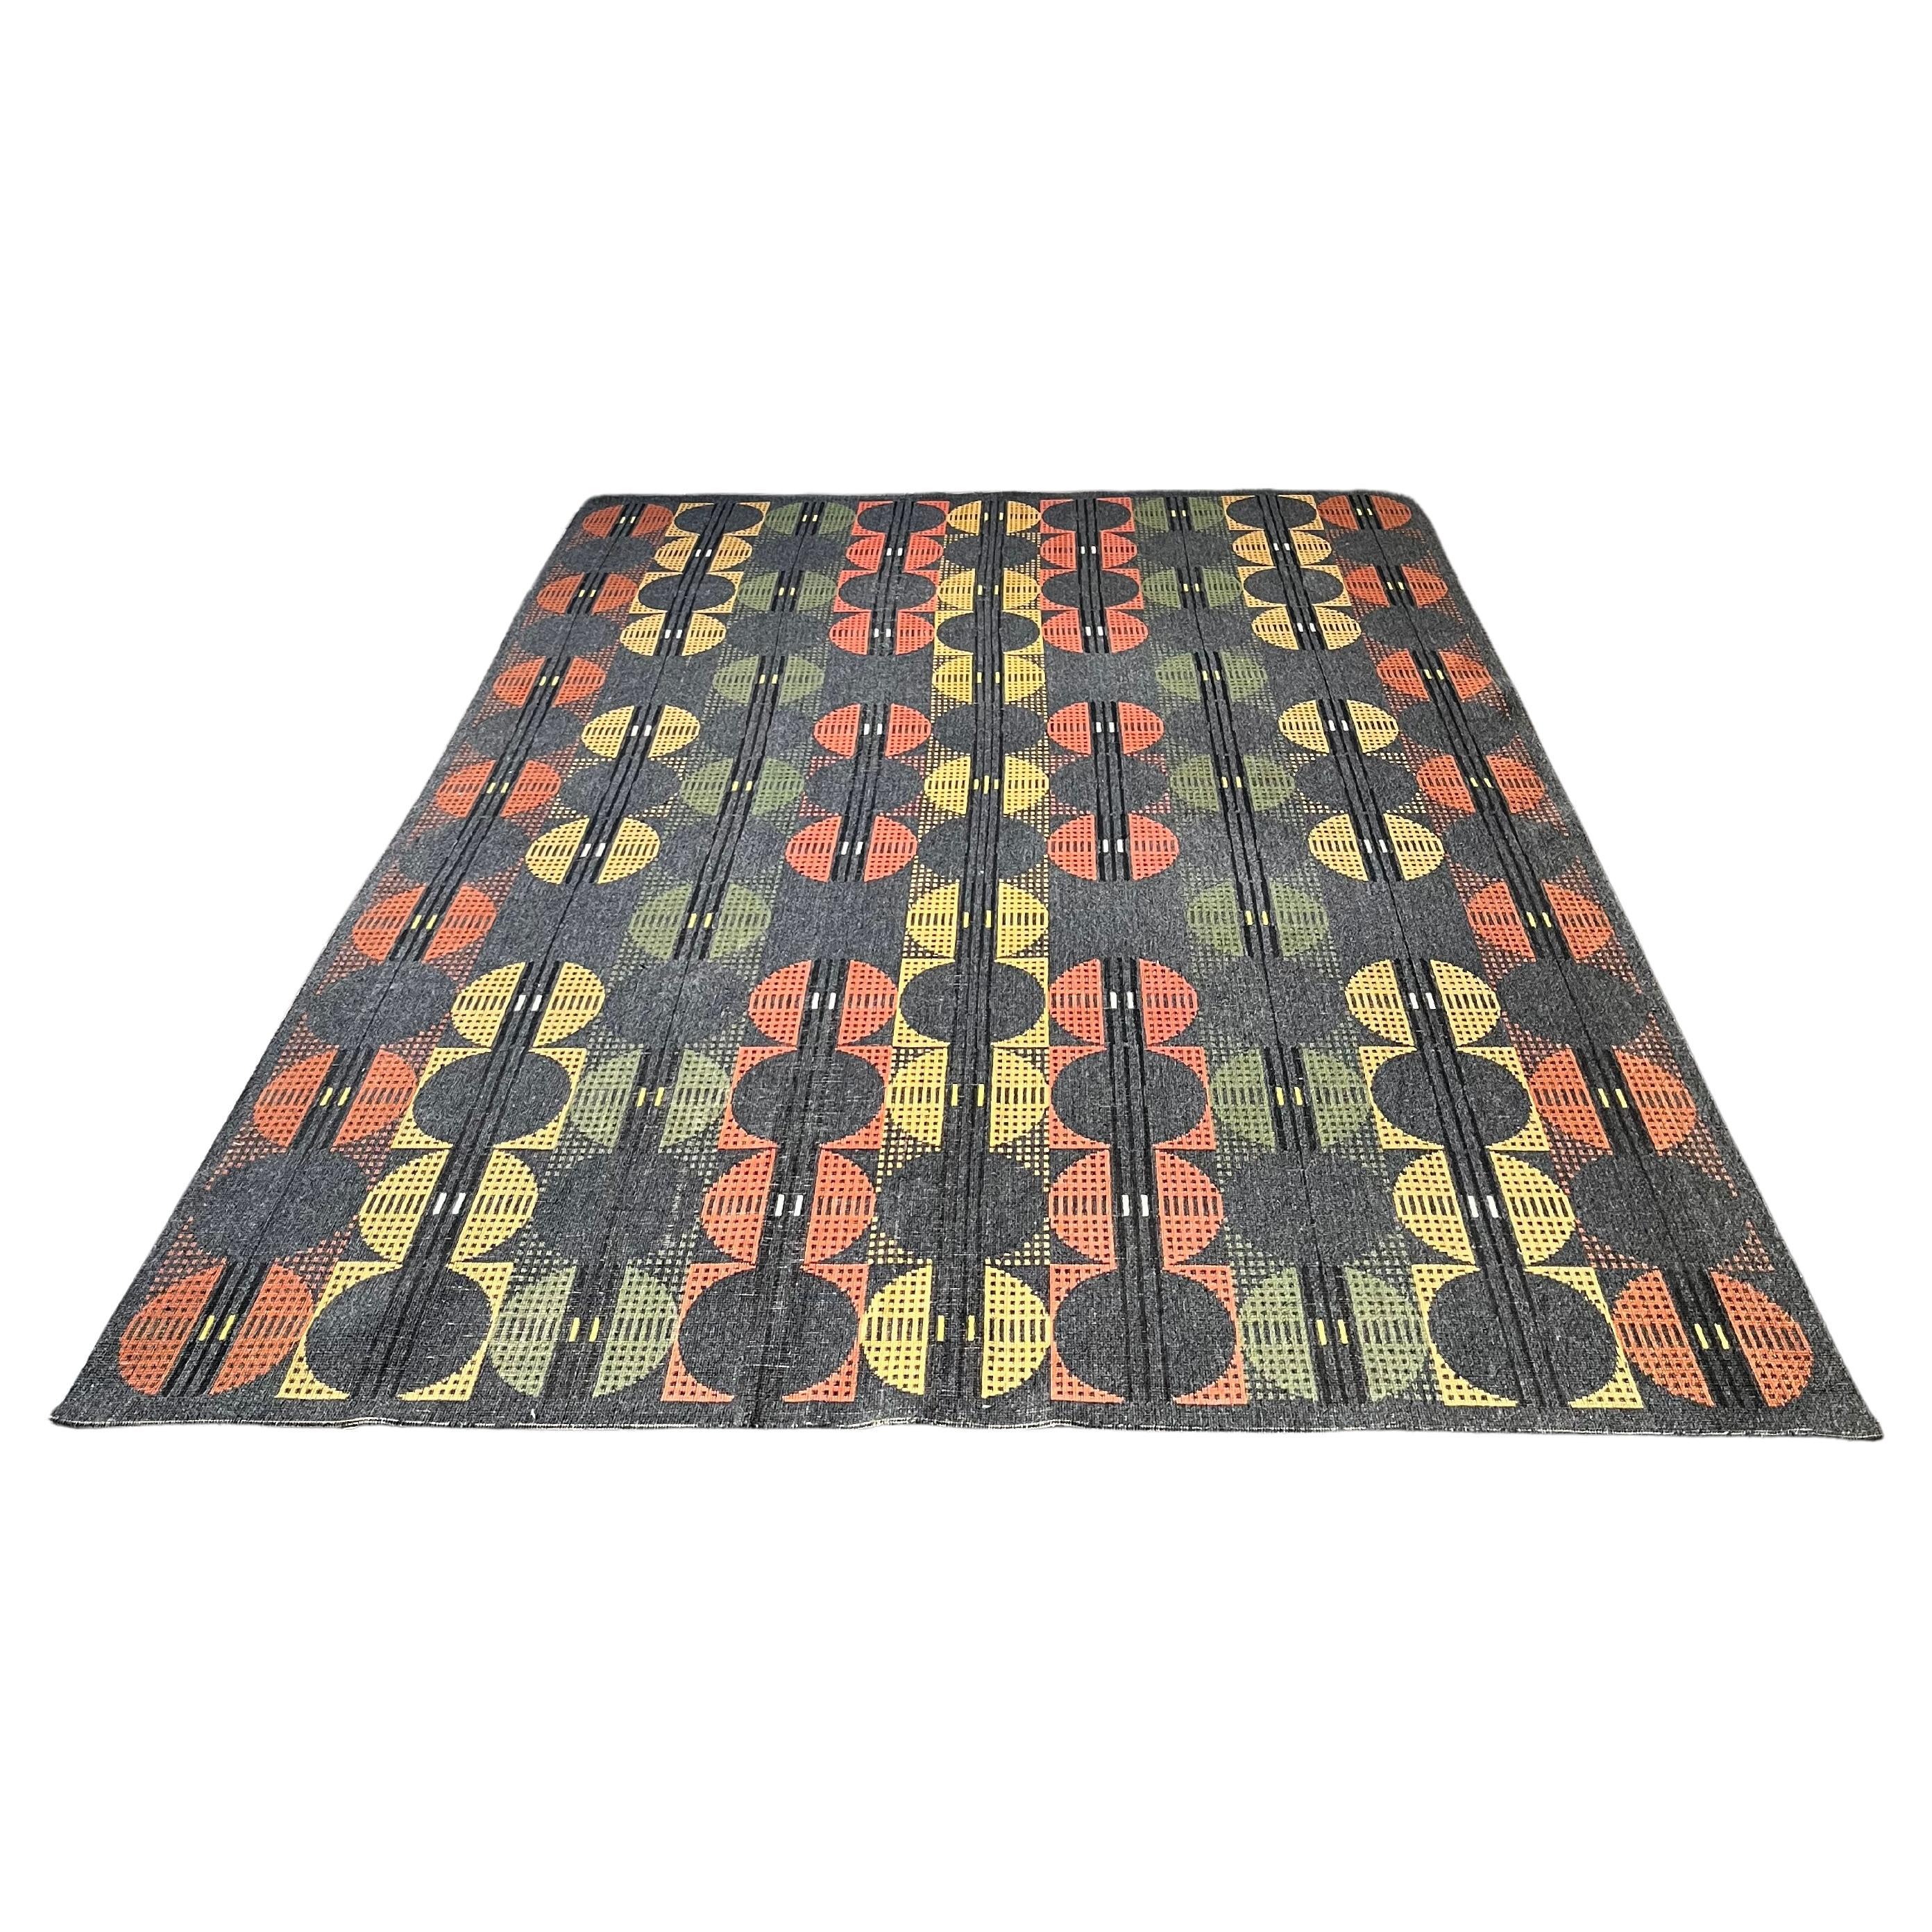 Midcentury Design Geometric Rug / Carpet, 1970s / Czechoslovakia For Sale